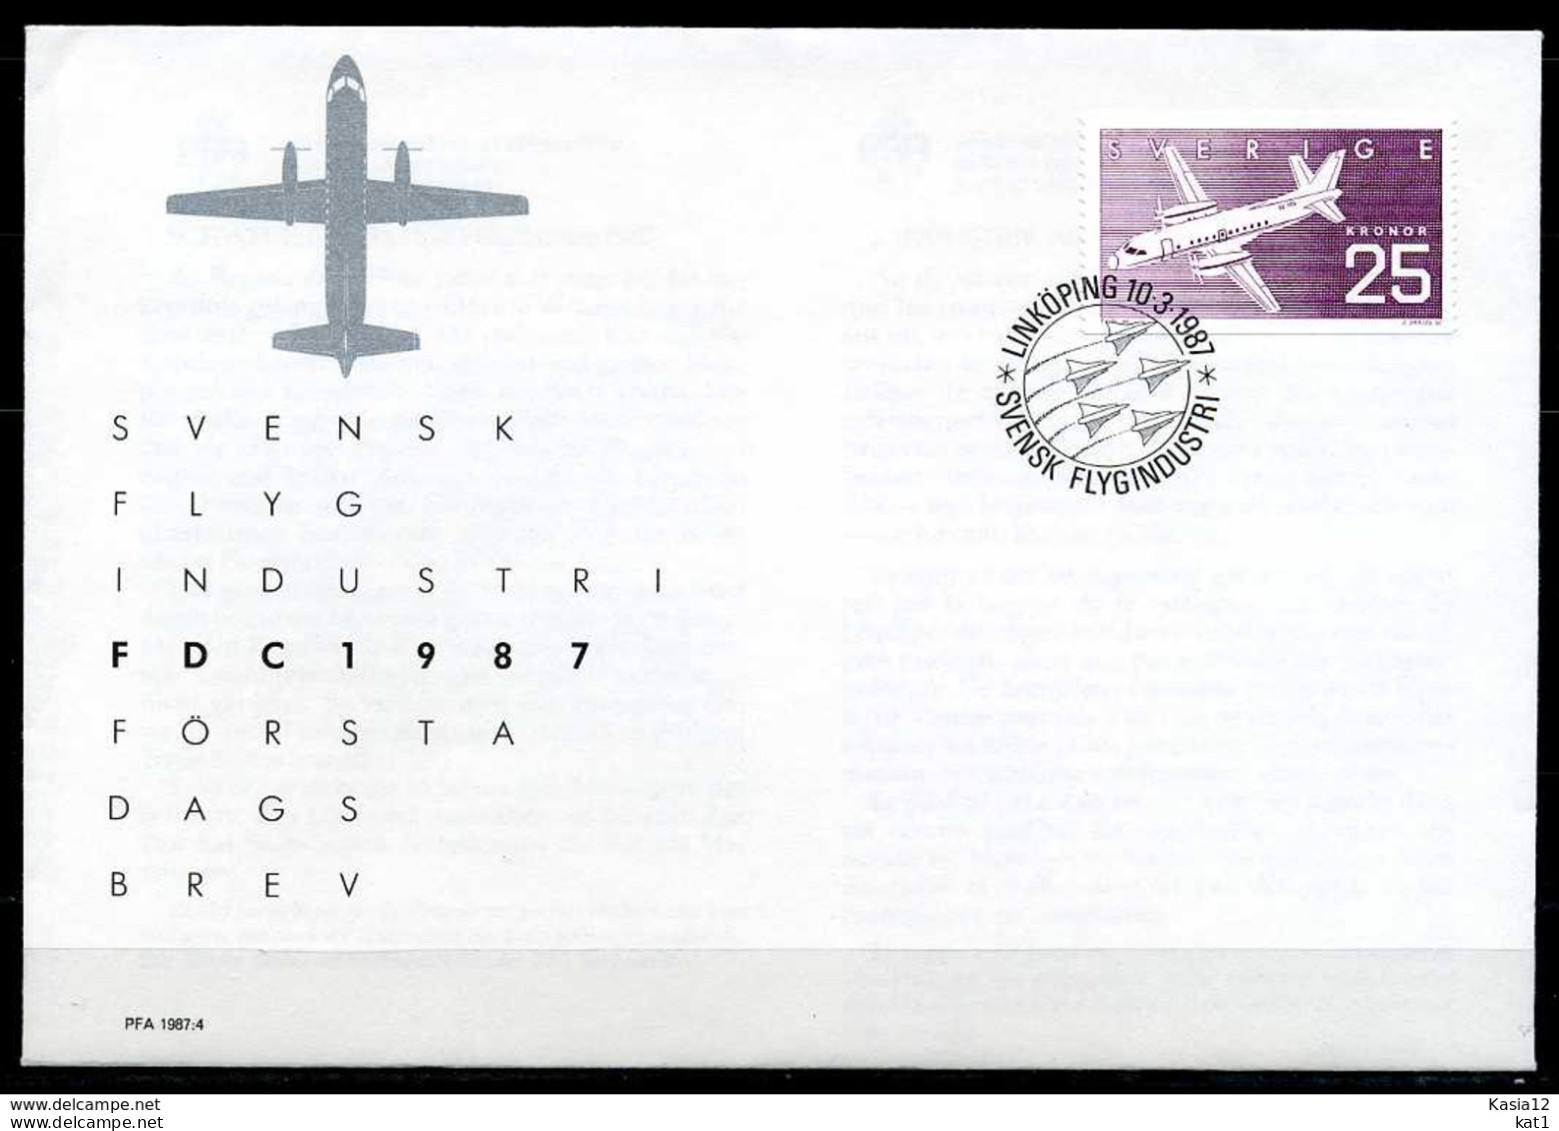 F0767)Schweden FDC 1427 Flugzeug - Lettres & Documents